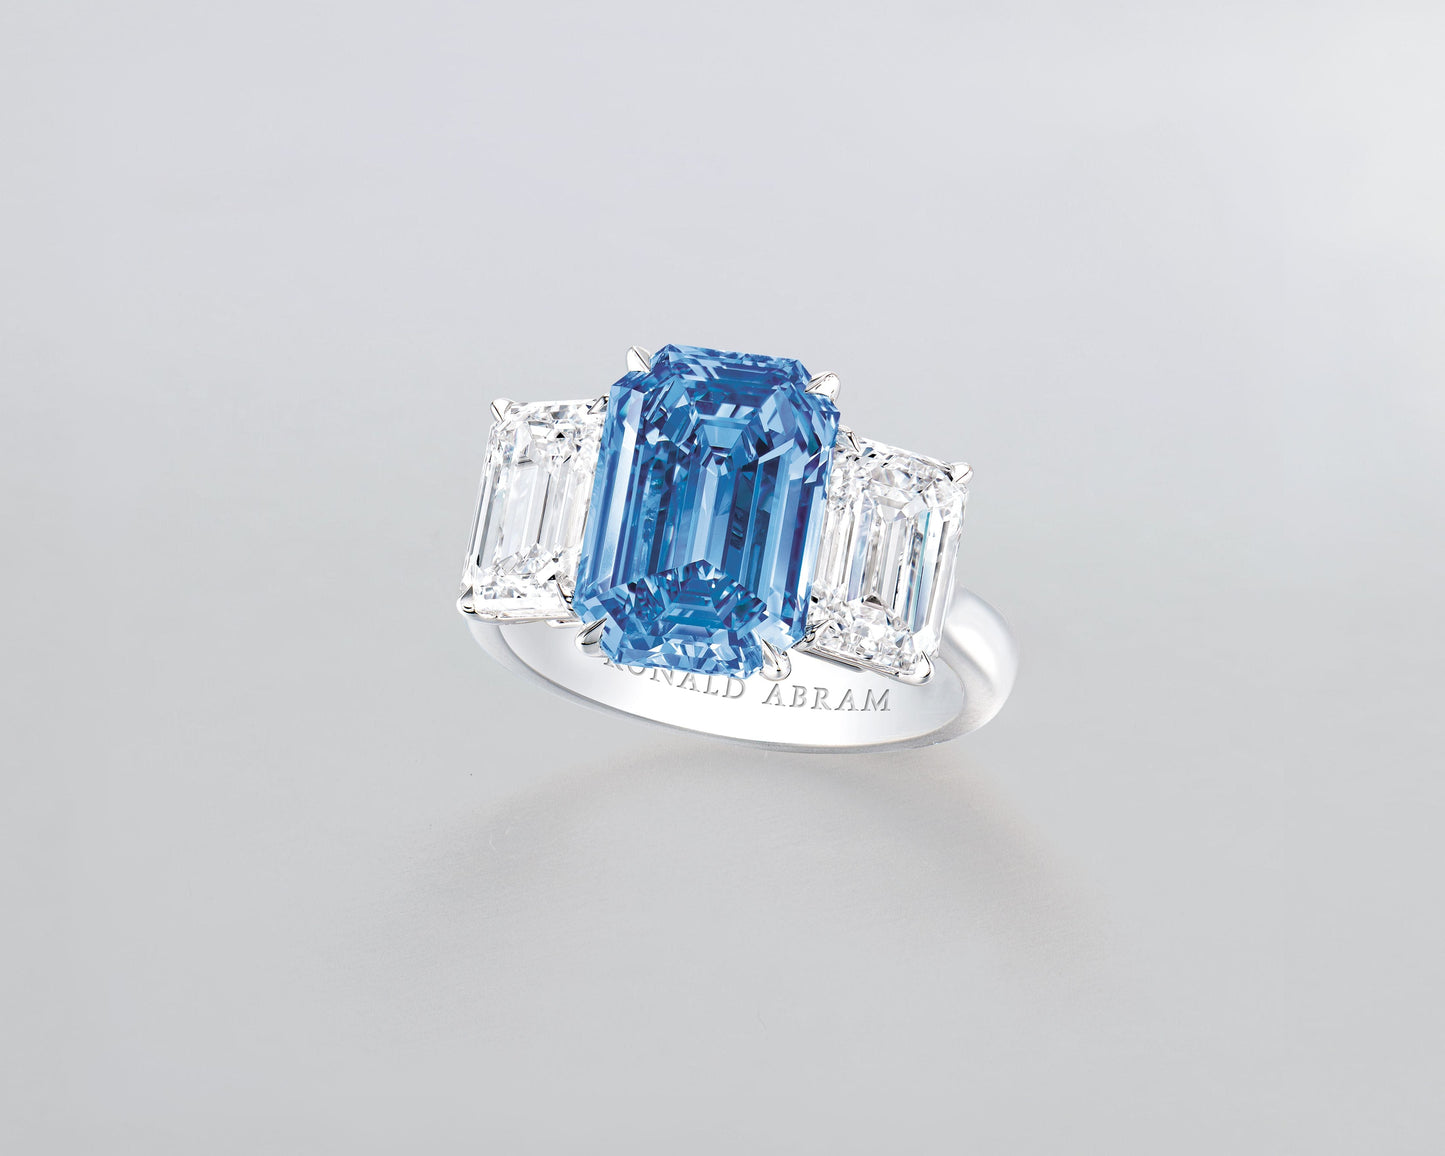 3.88 carat Emerald Cut Fancy Vivid Blue Diamond Ring